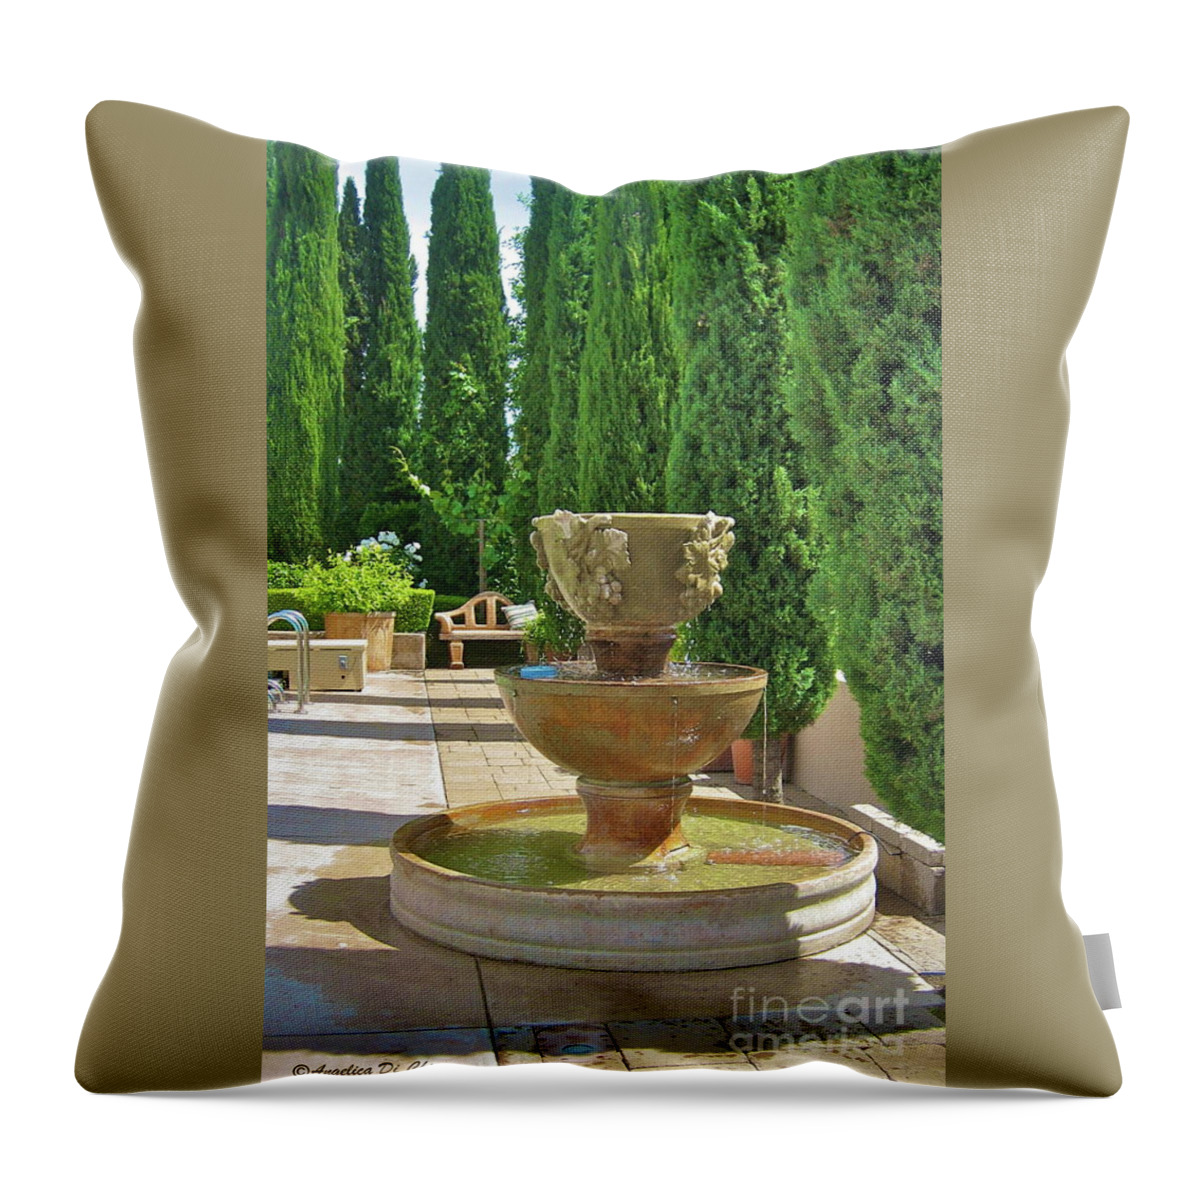 Cityscape Throw Pillow featuring the photograph Californian Tuscan Villa by Italian Art